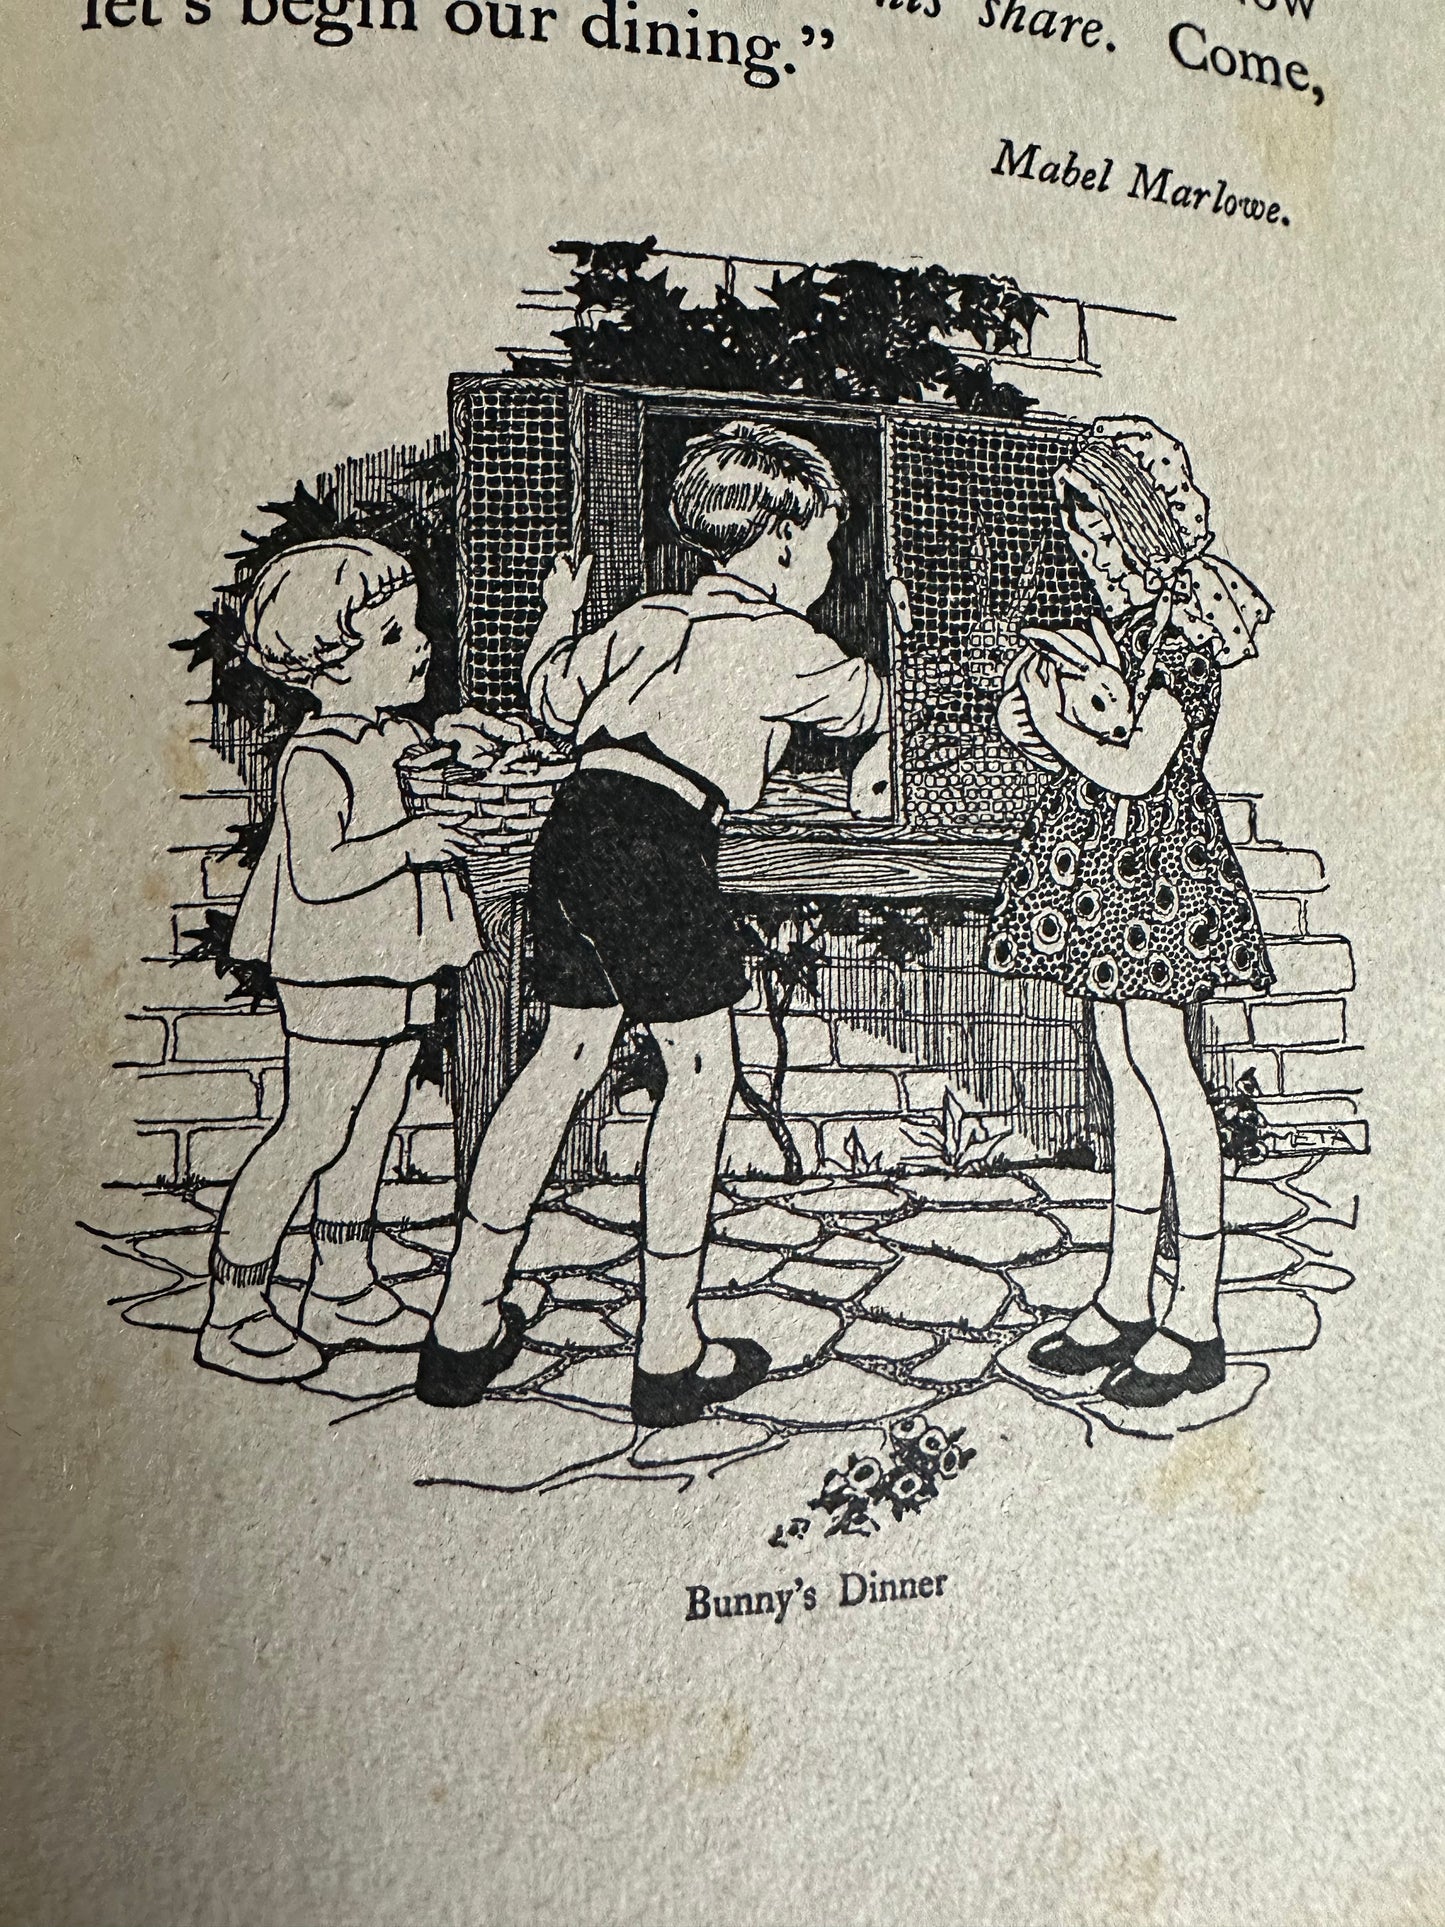 1930’s A Bunch Of Children’s Stories (Blackie & Son Co Ltd)